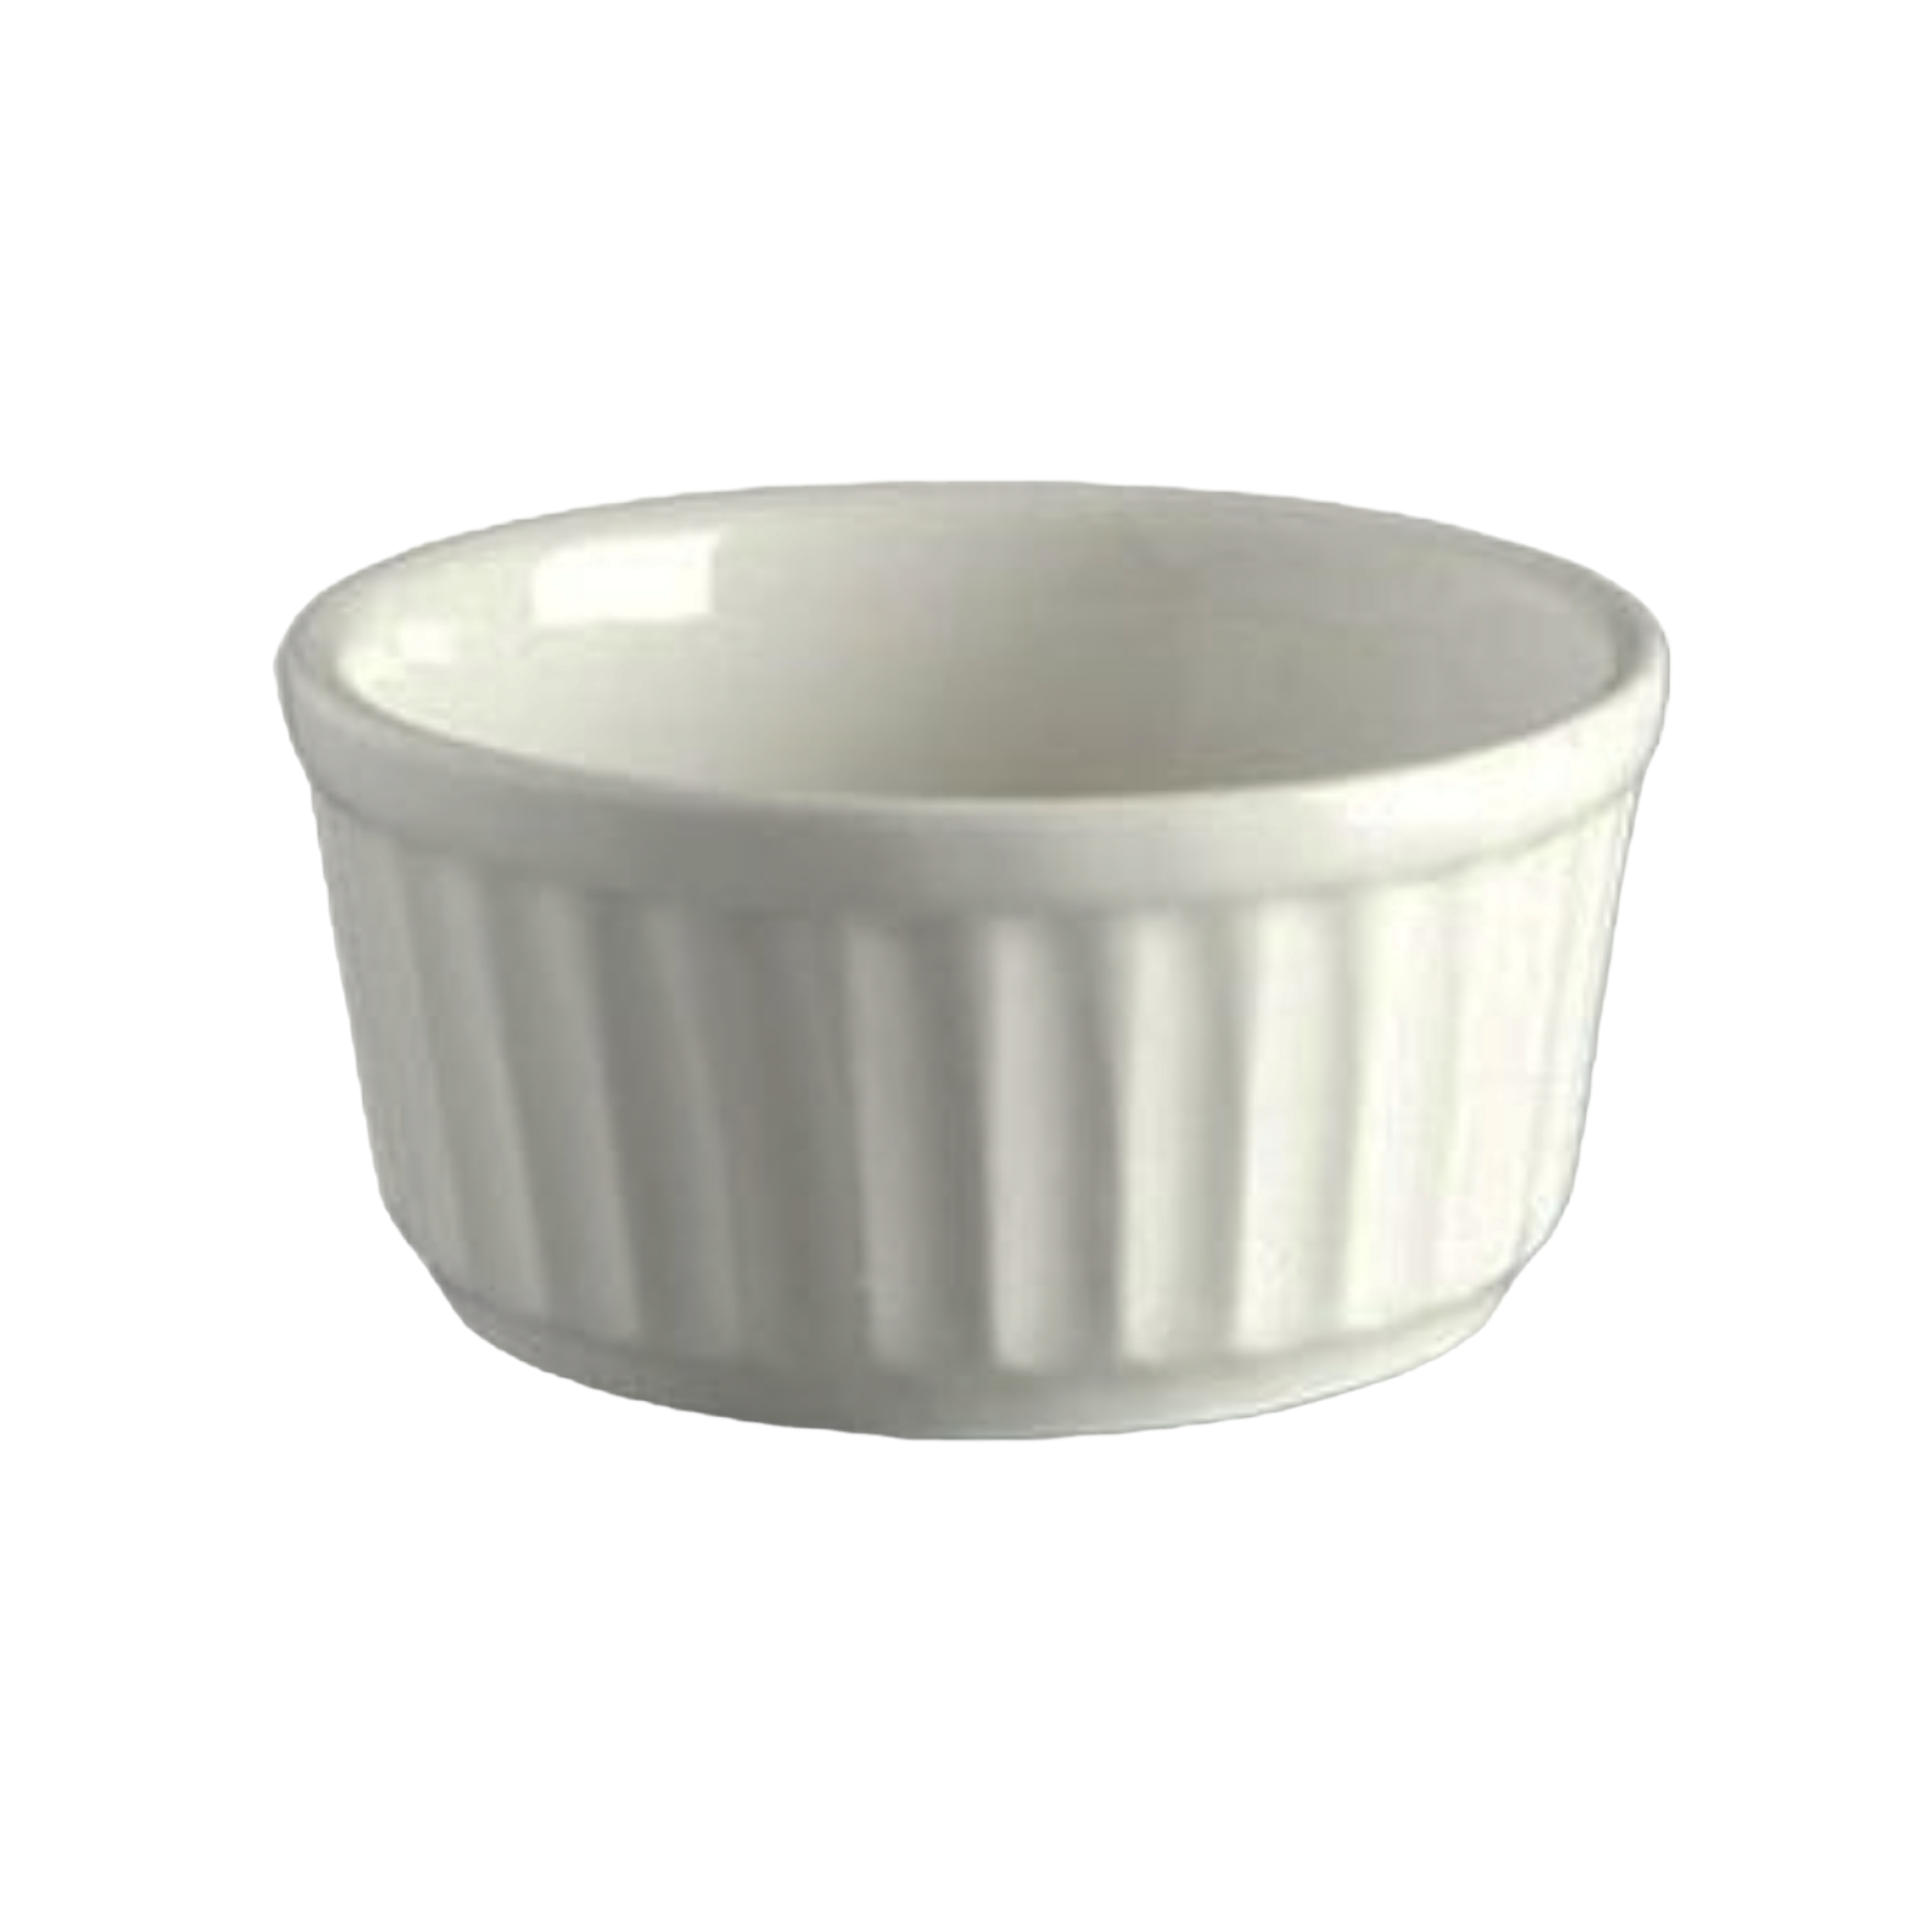 Ramekin Ceramic Ribbed 10inch 5cmx10cm White Baking Round Bowl